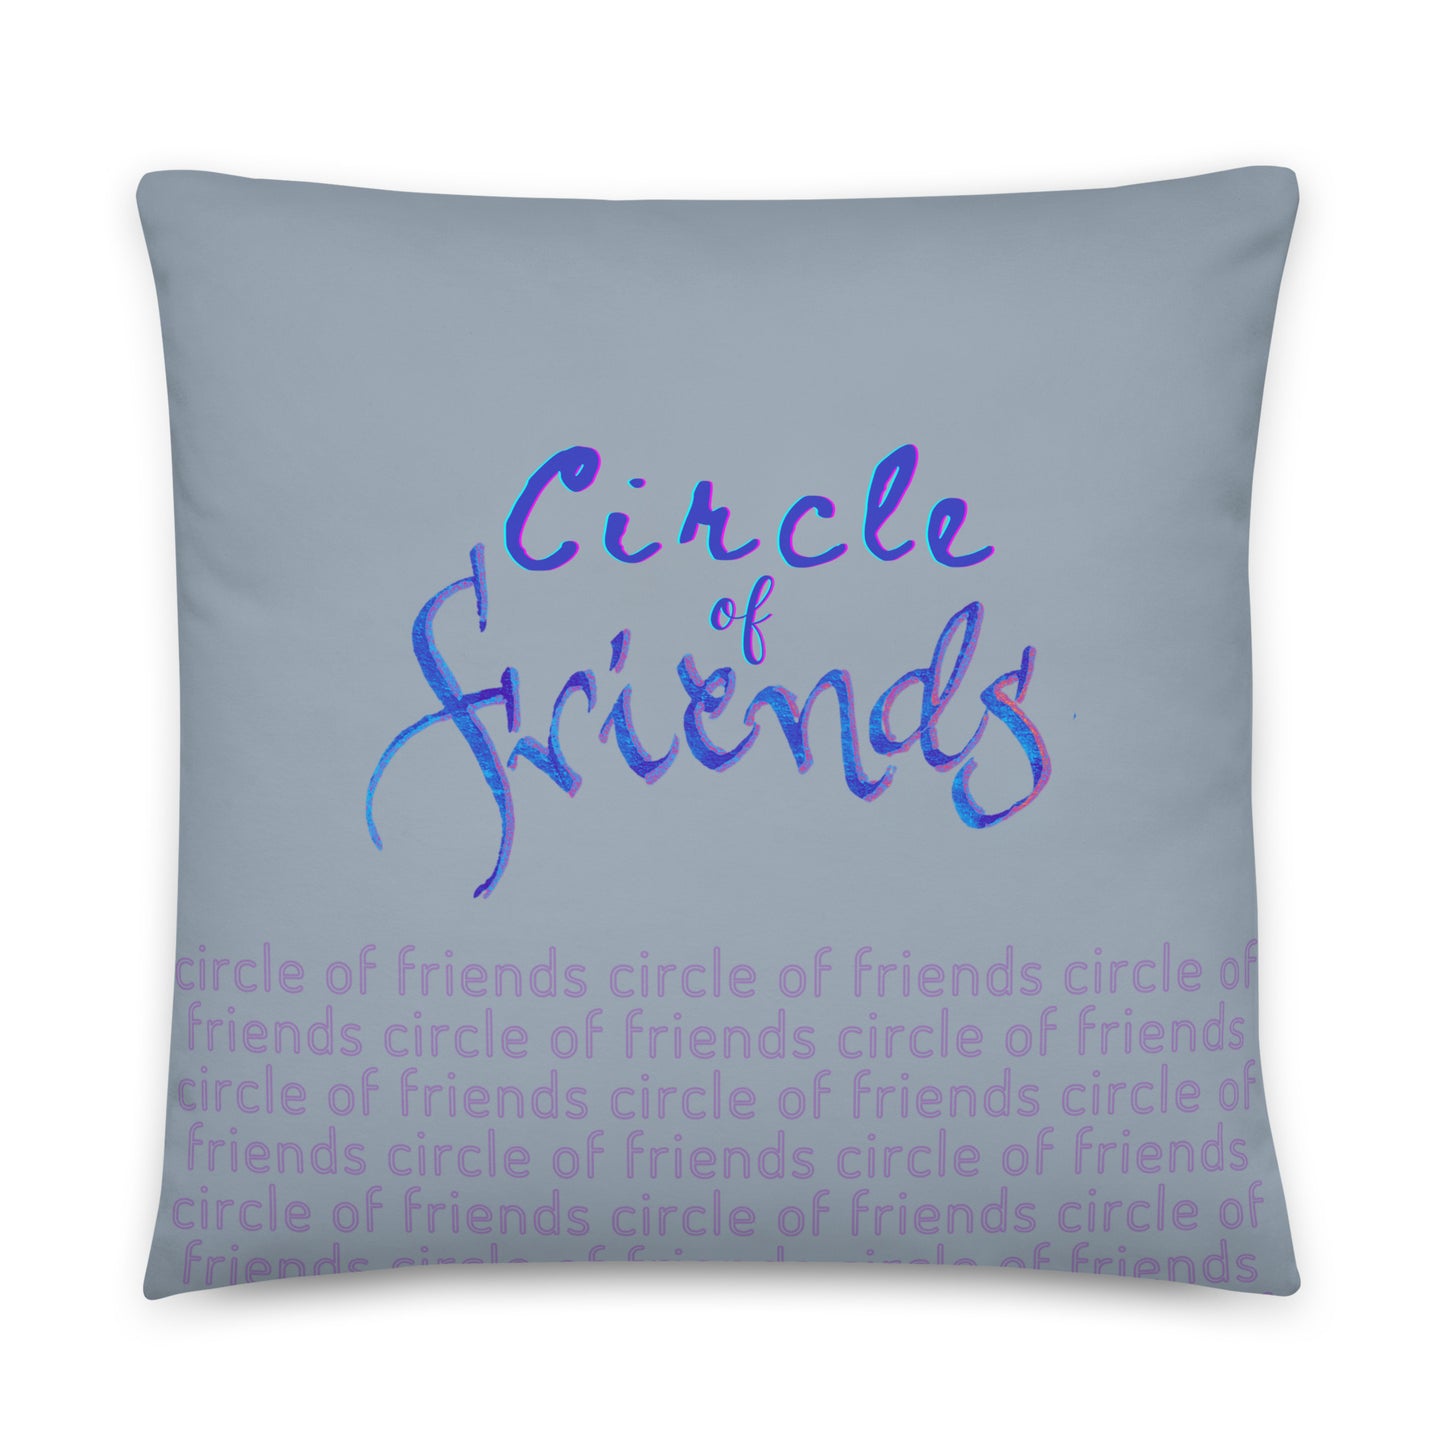 Circle of Friends: Cushions